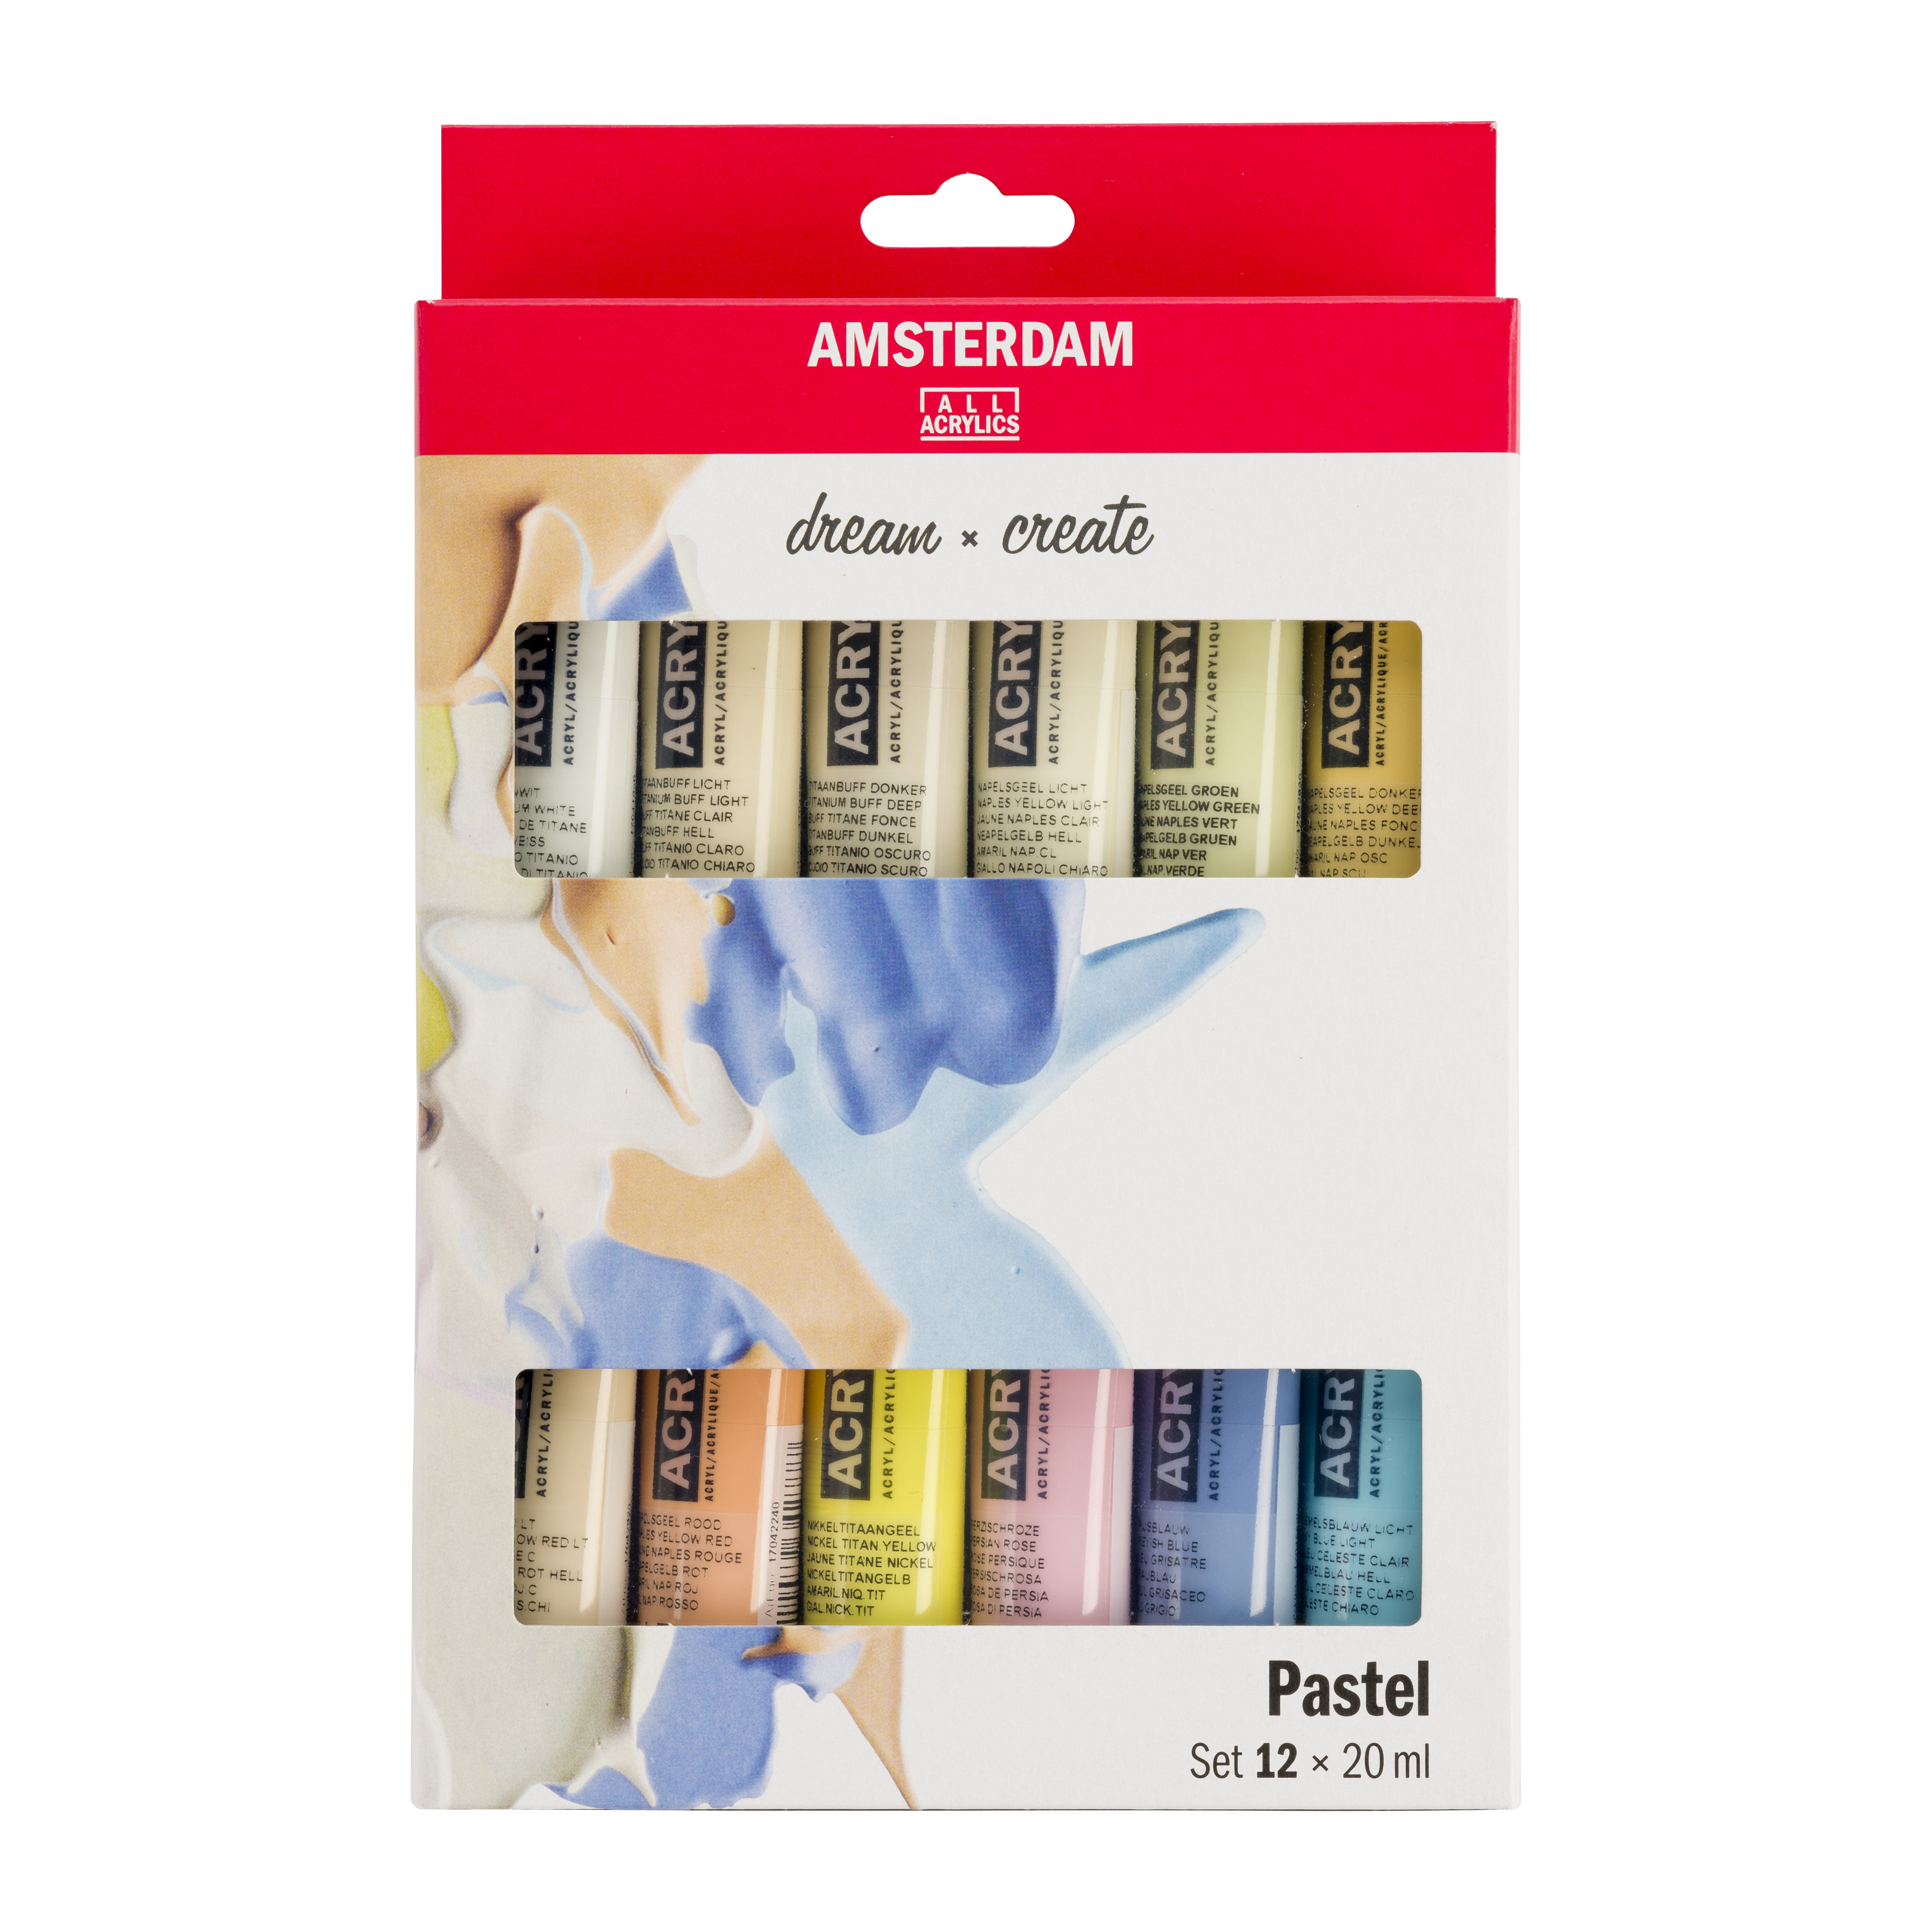 AMSTERDAM Standard Series Acryl Set 17820601 Pastel 12X20ml